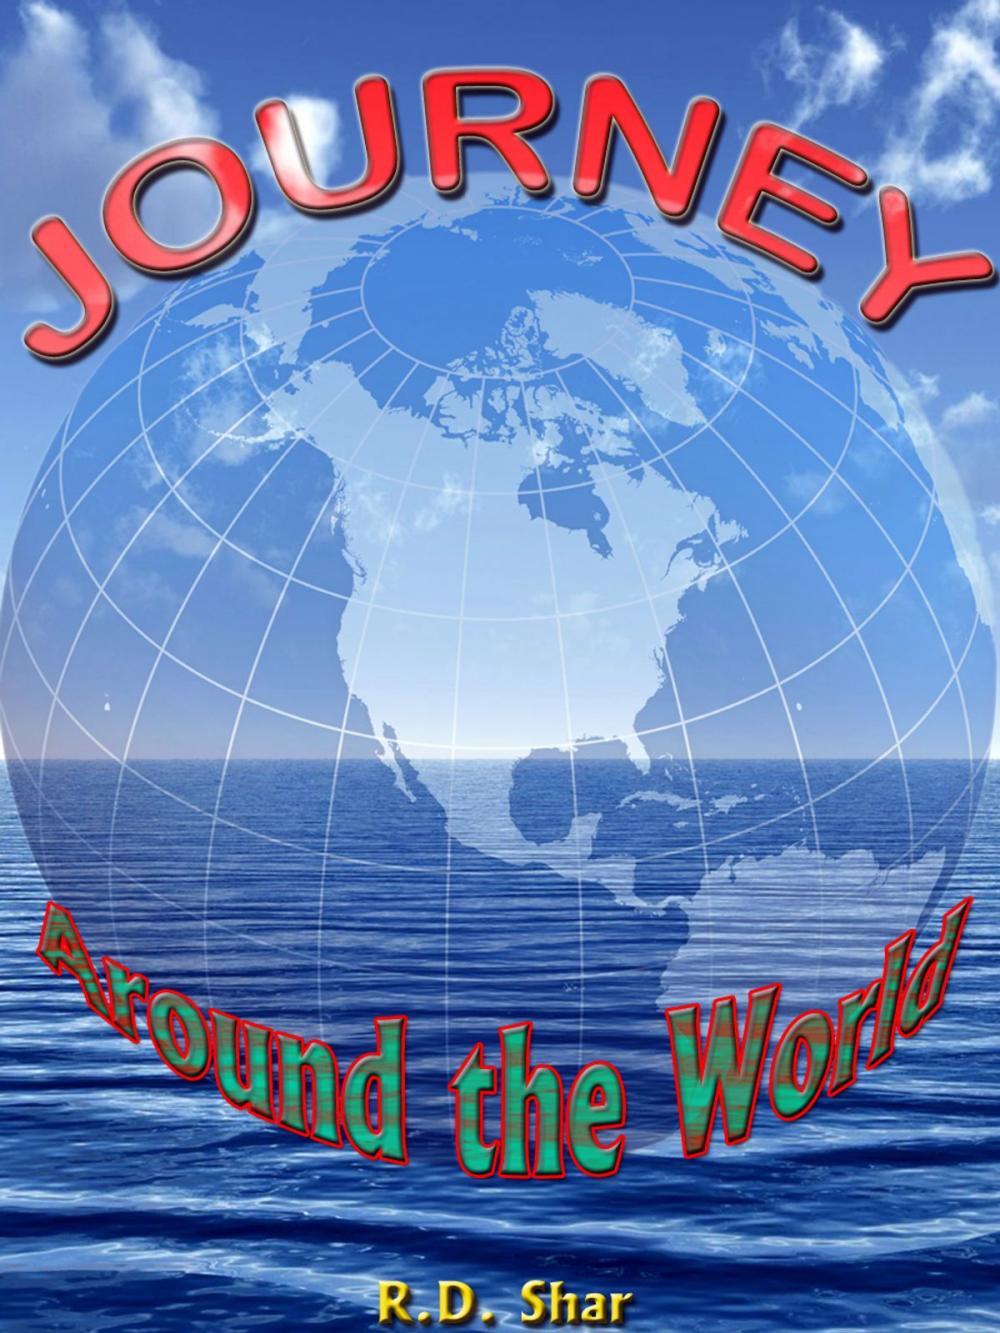 Big bigCover of Journey Around the World